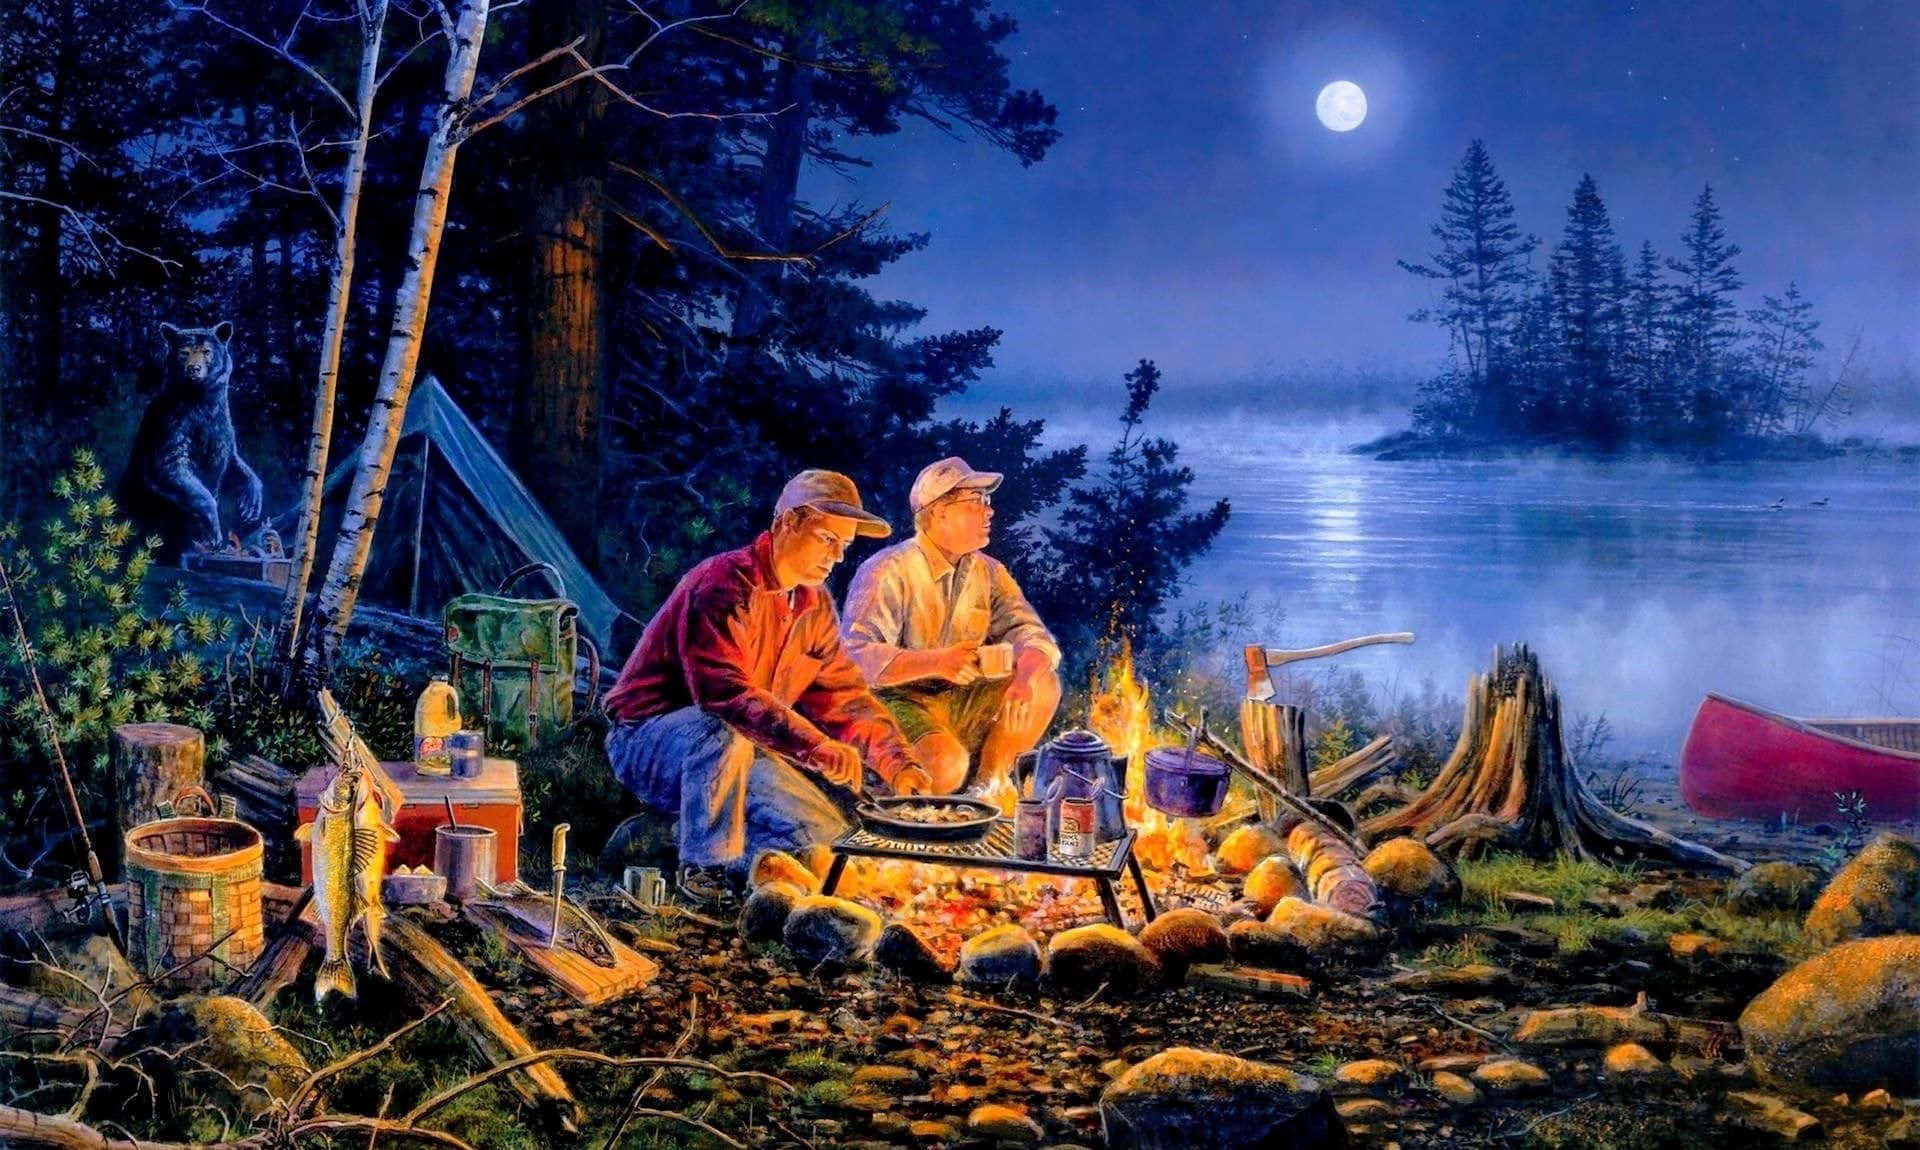 Cozy Campfire in the Wild